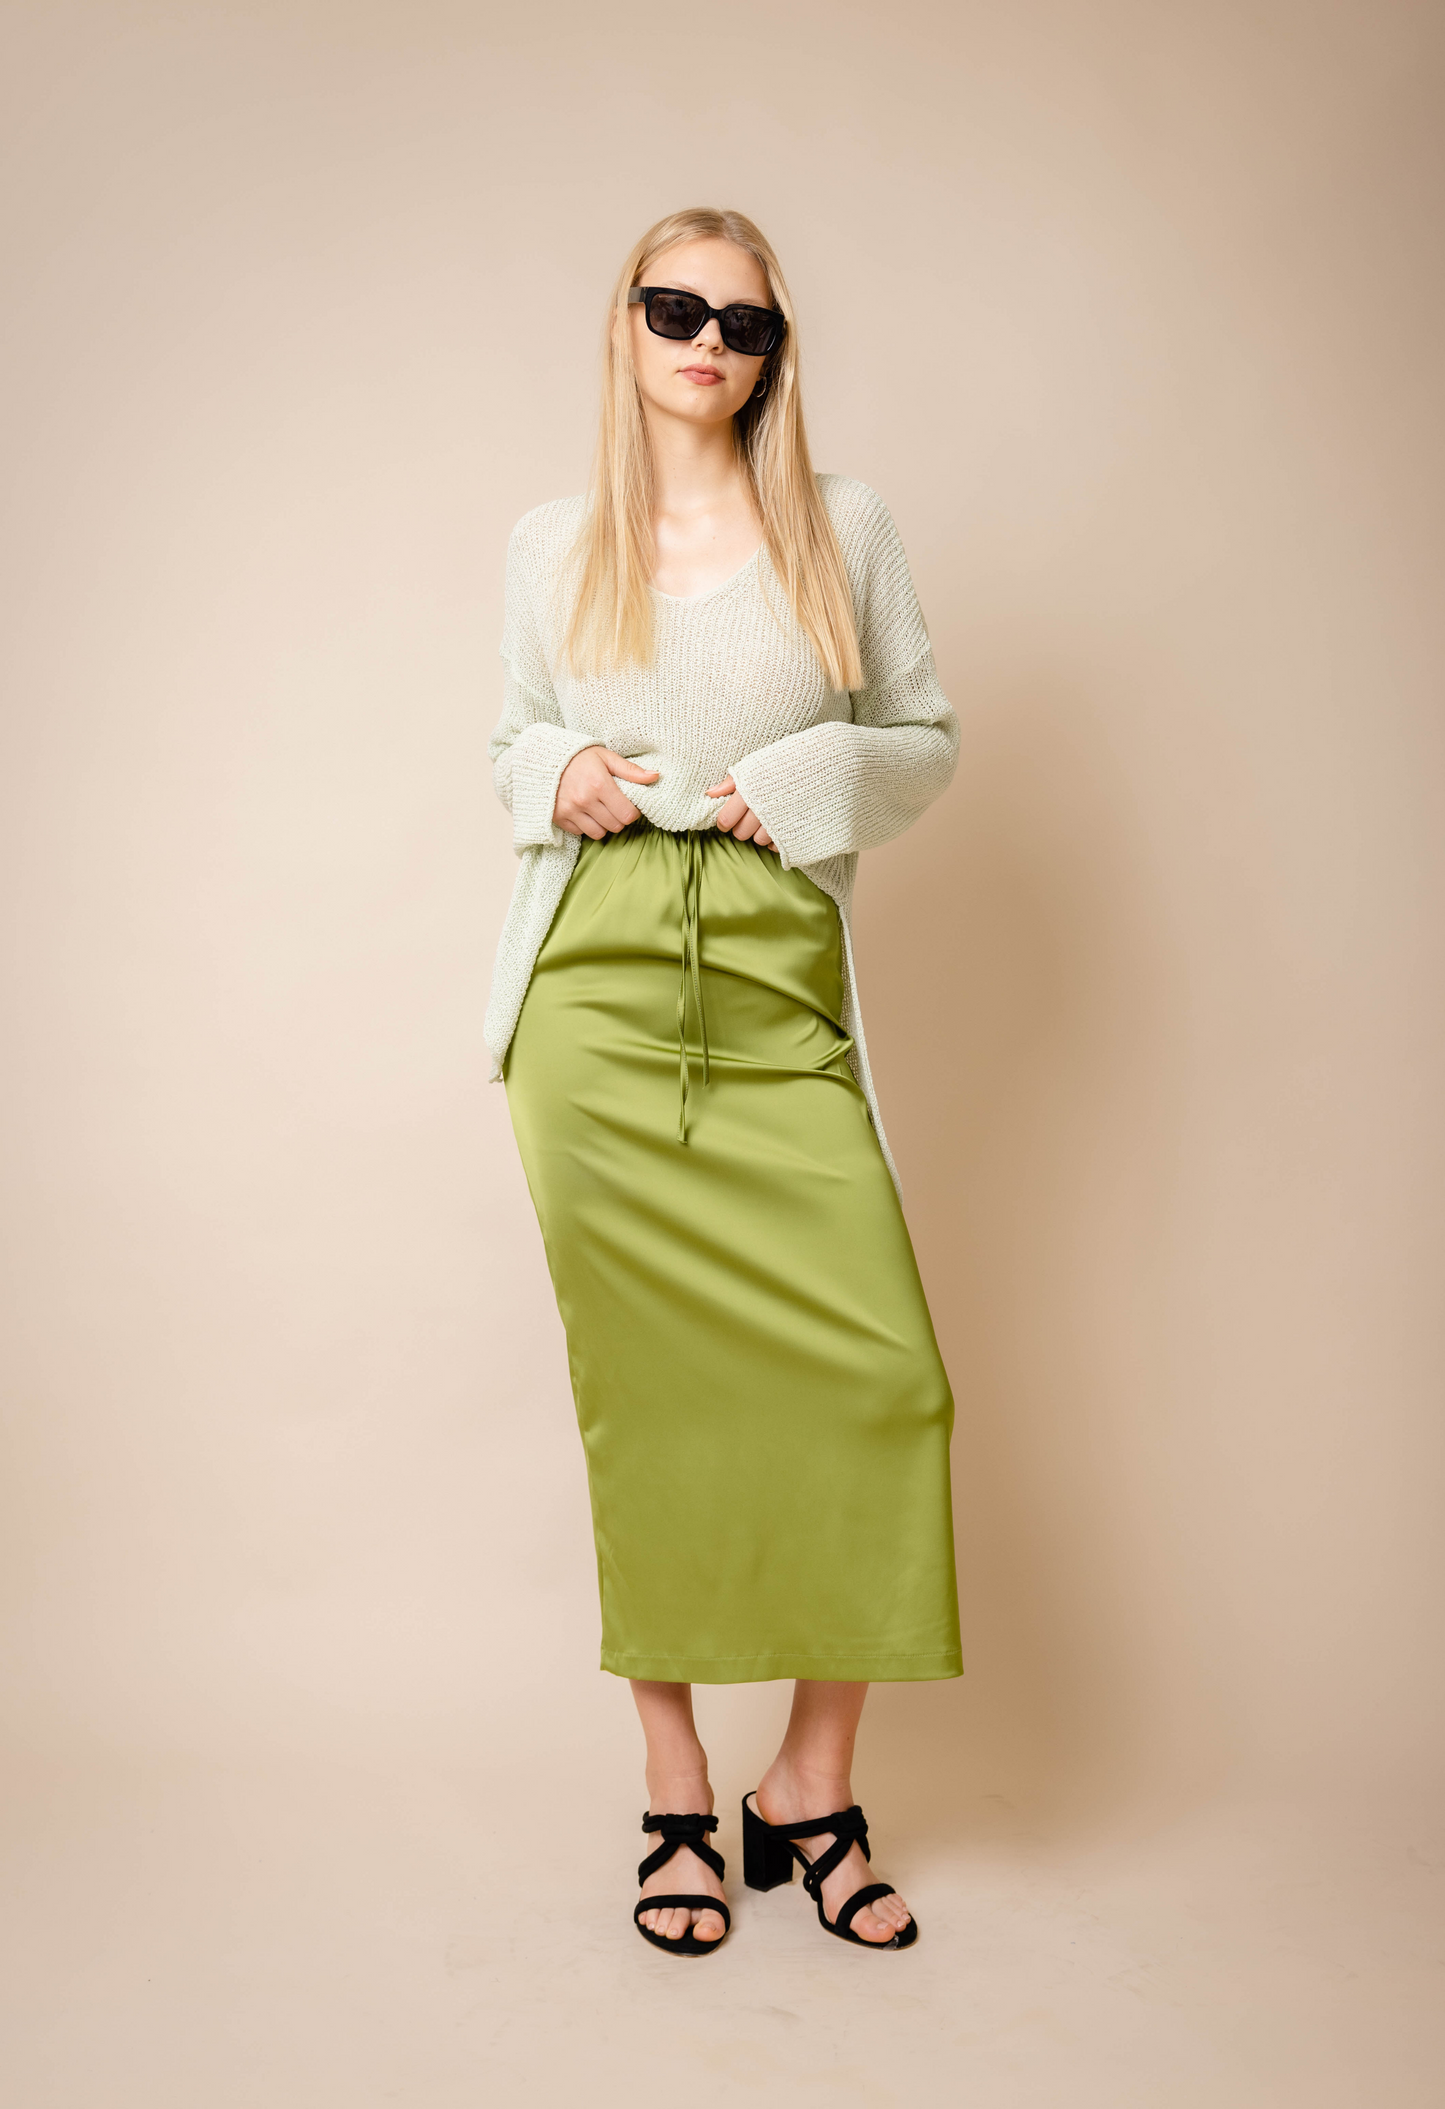 Ivy Satin Skirt in Green